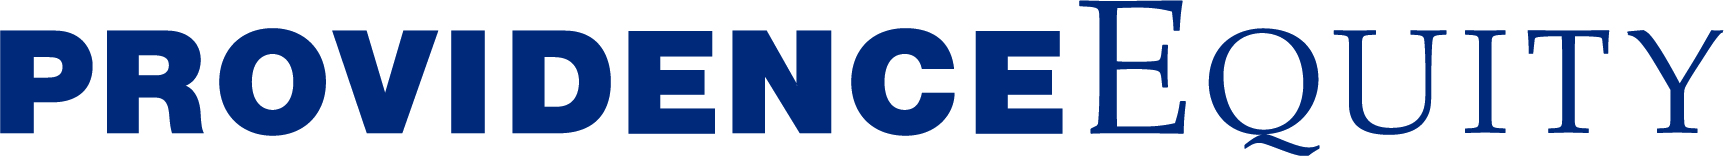 providence-equity-logo